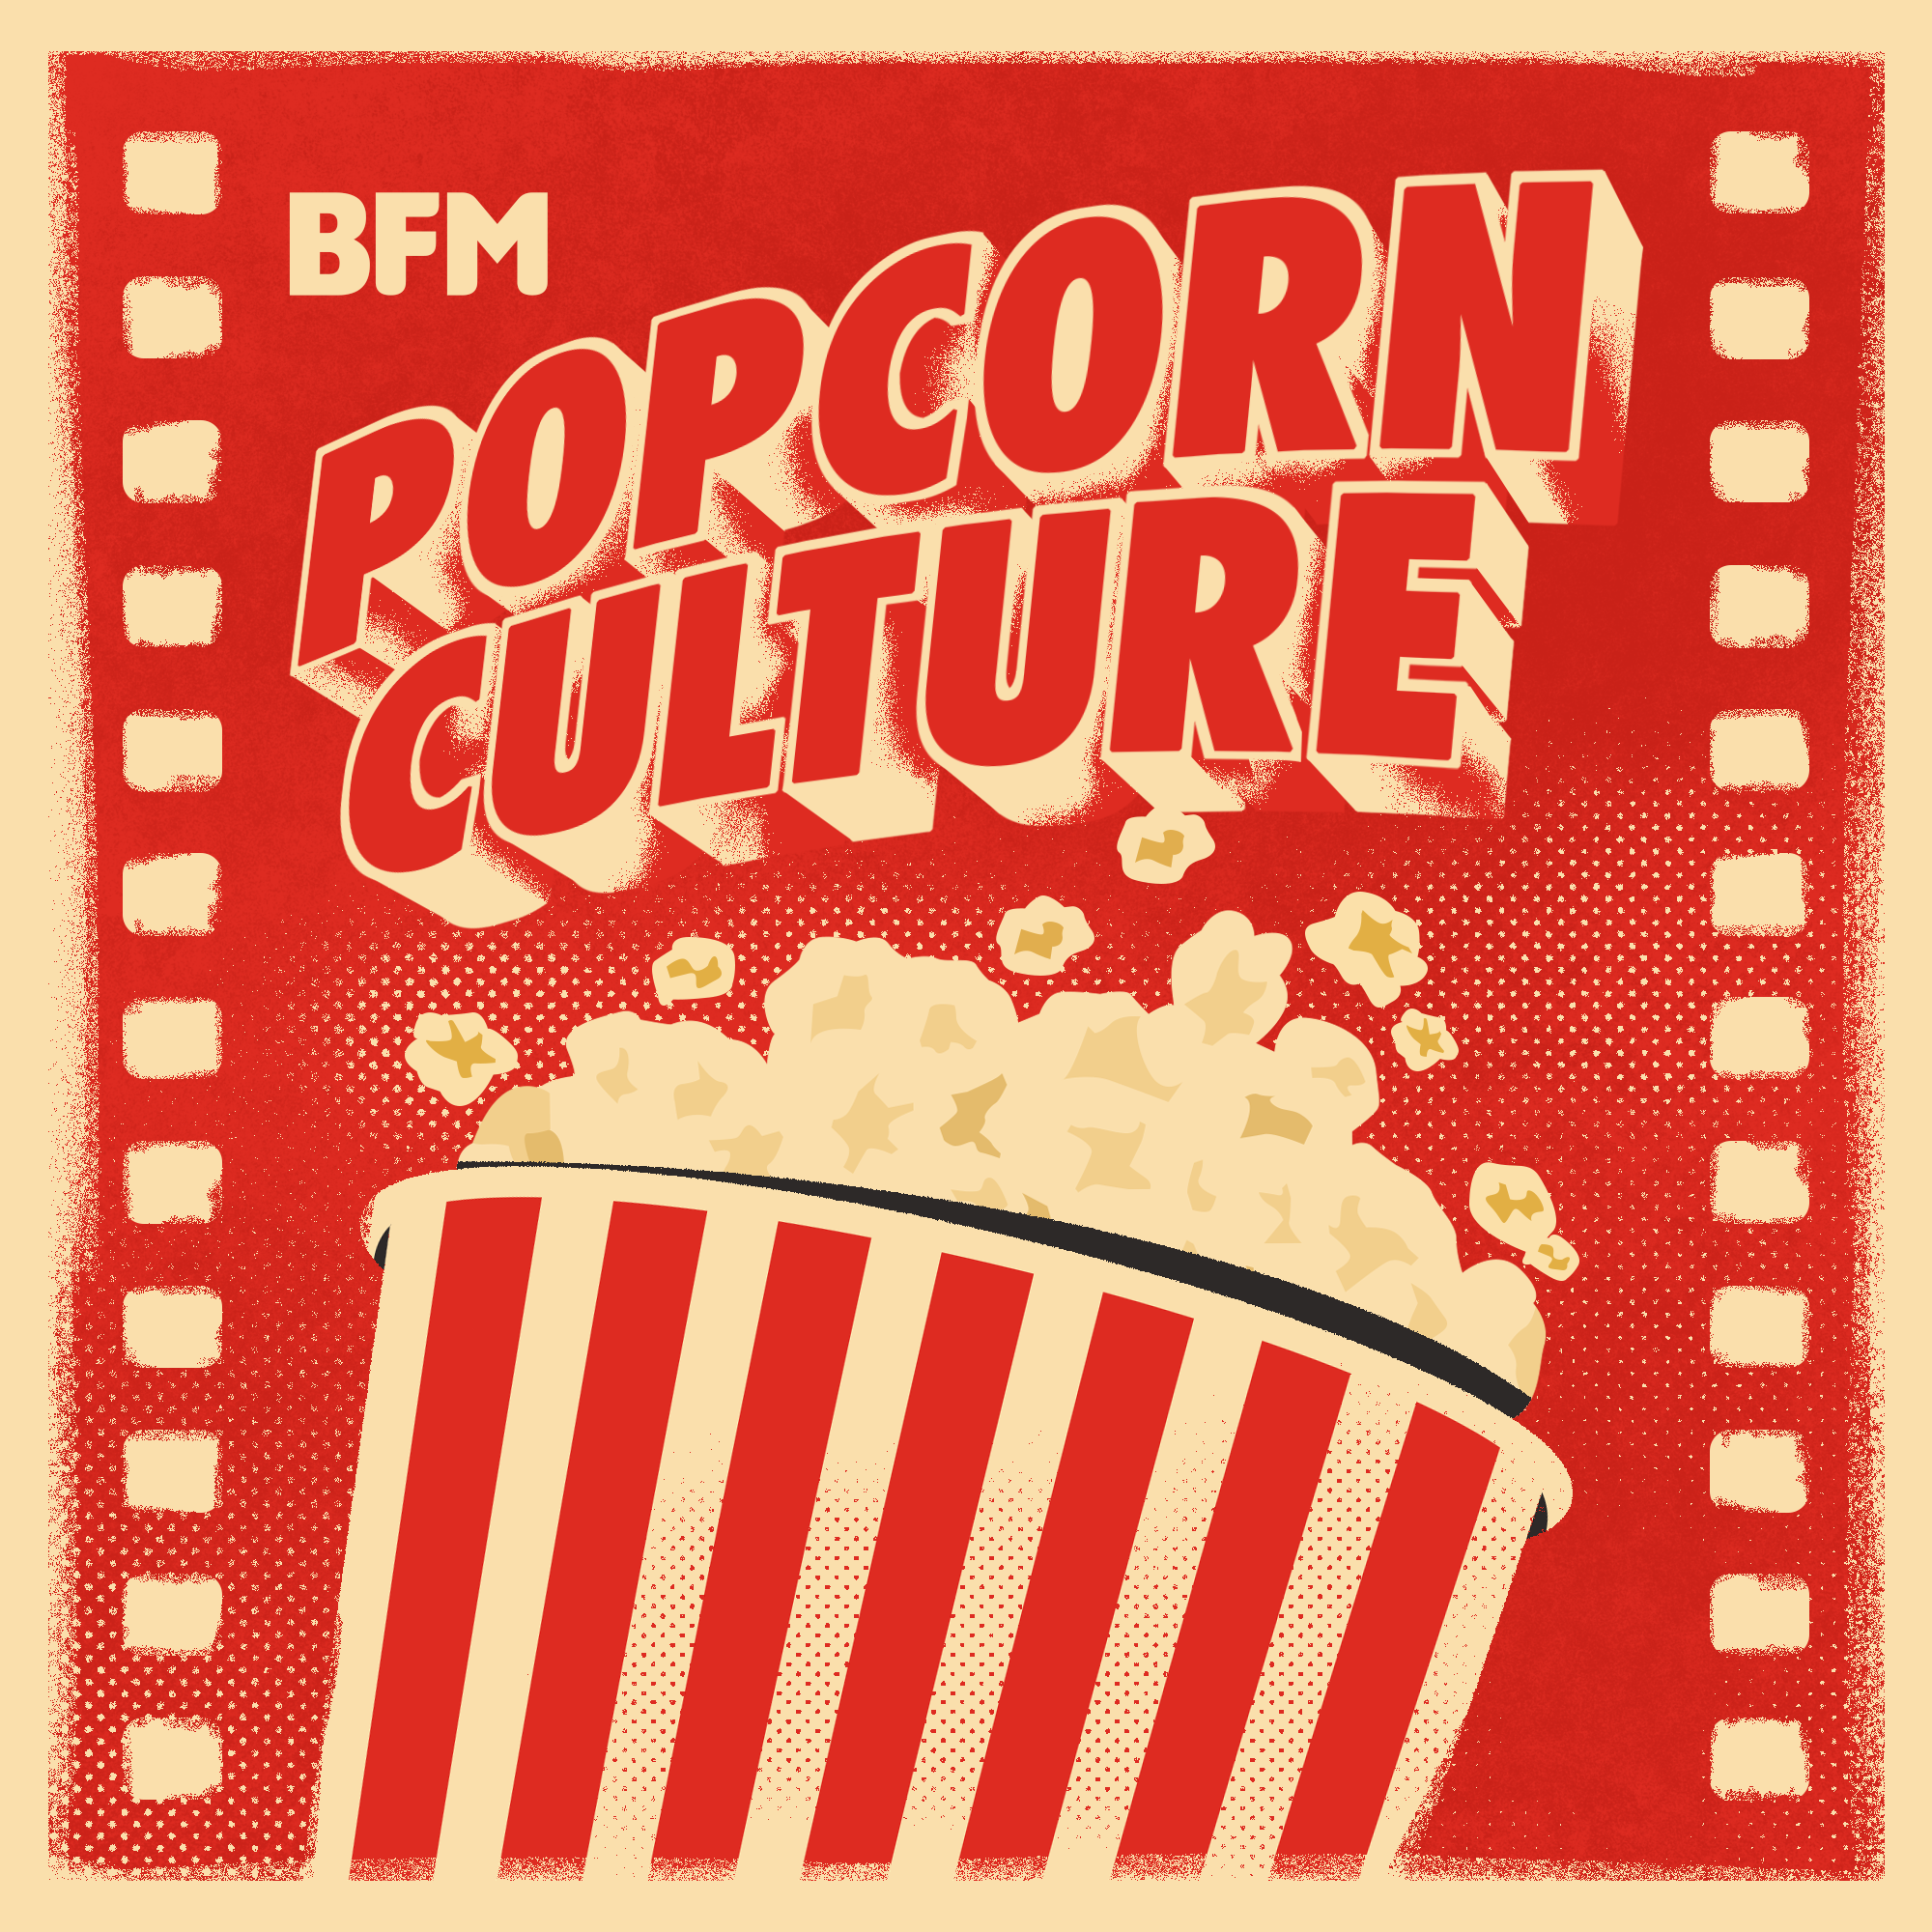 Popcorn Culture - Supercut: How Long Is Too Long?